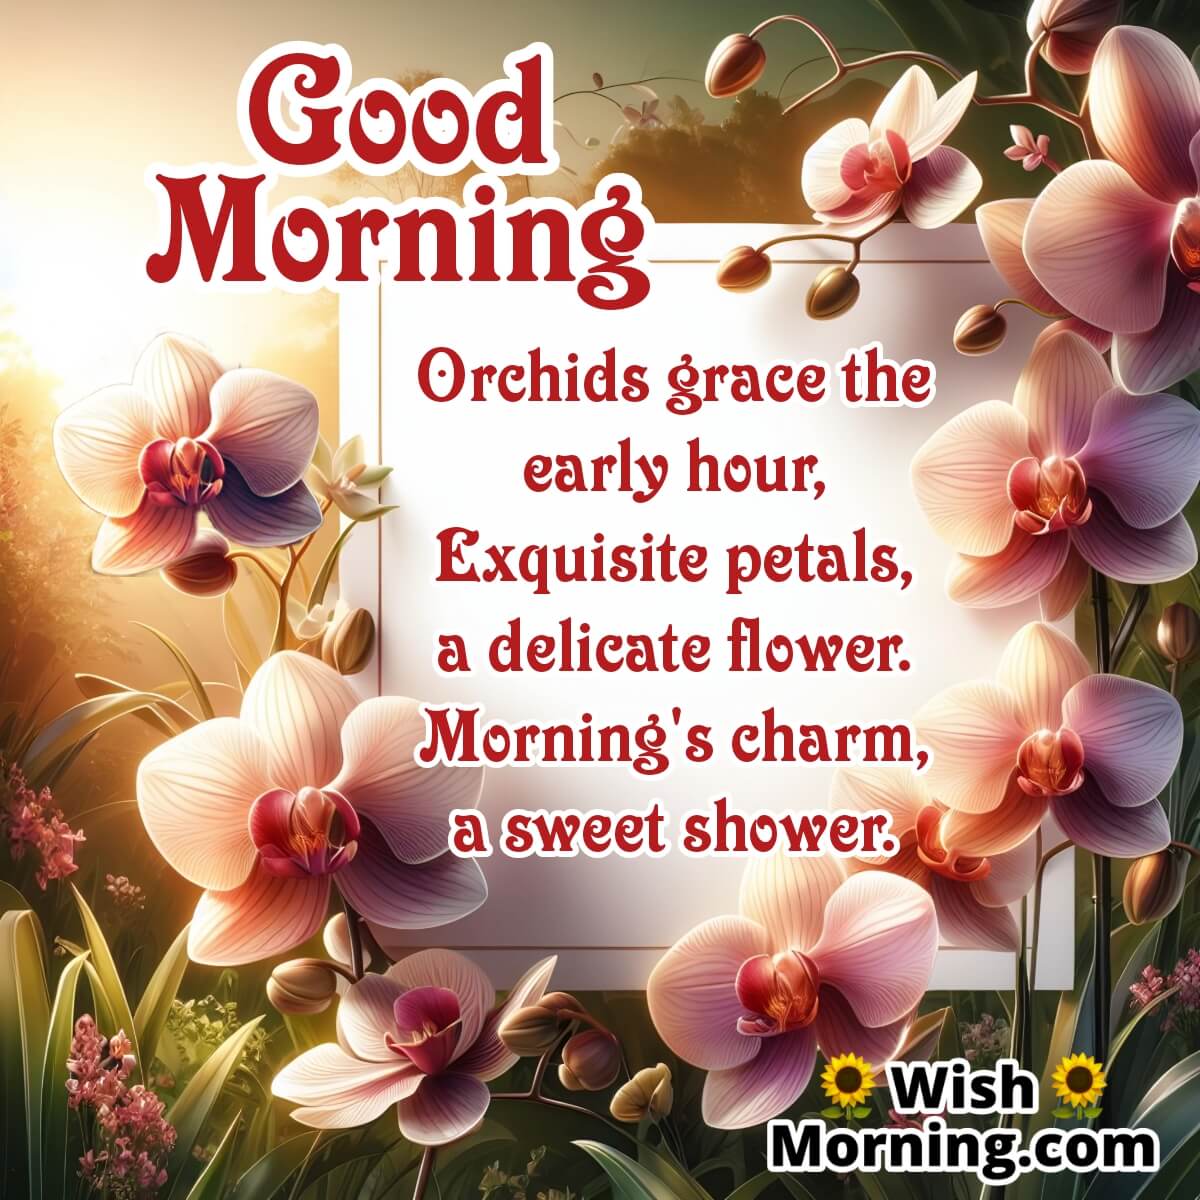 Good Morning Orchid Graceful Poem